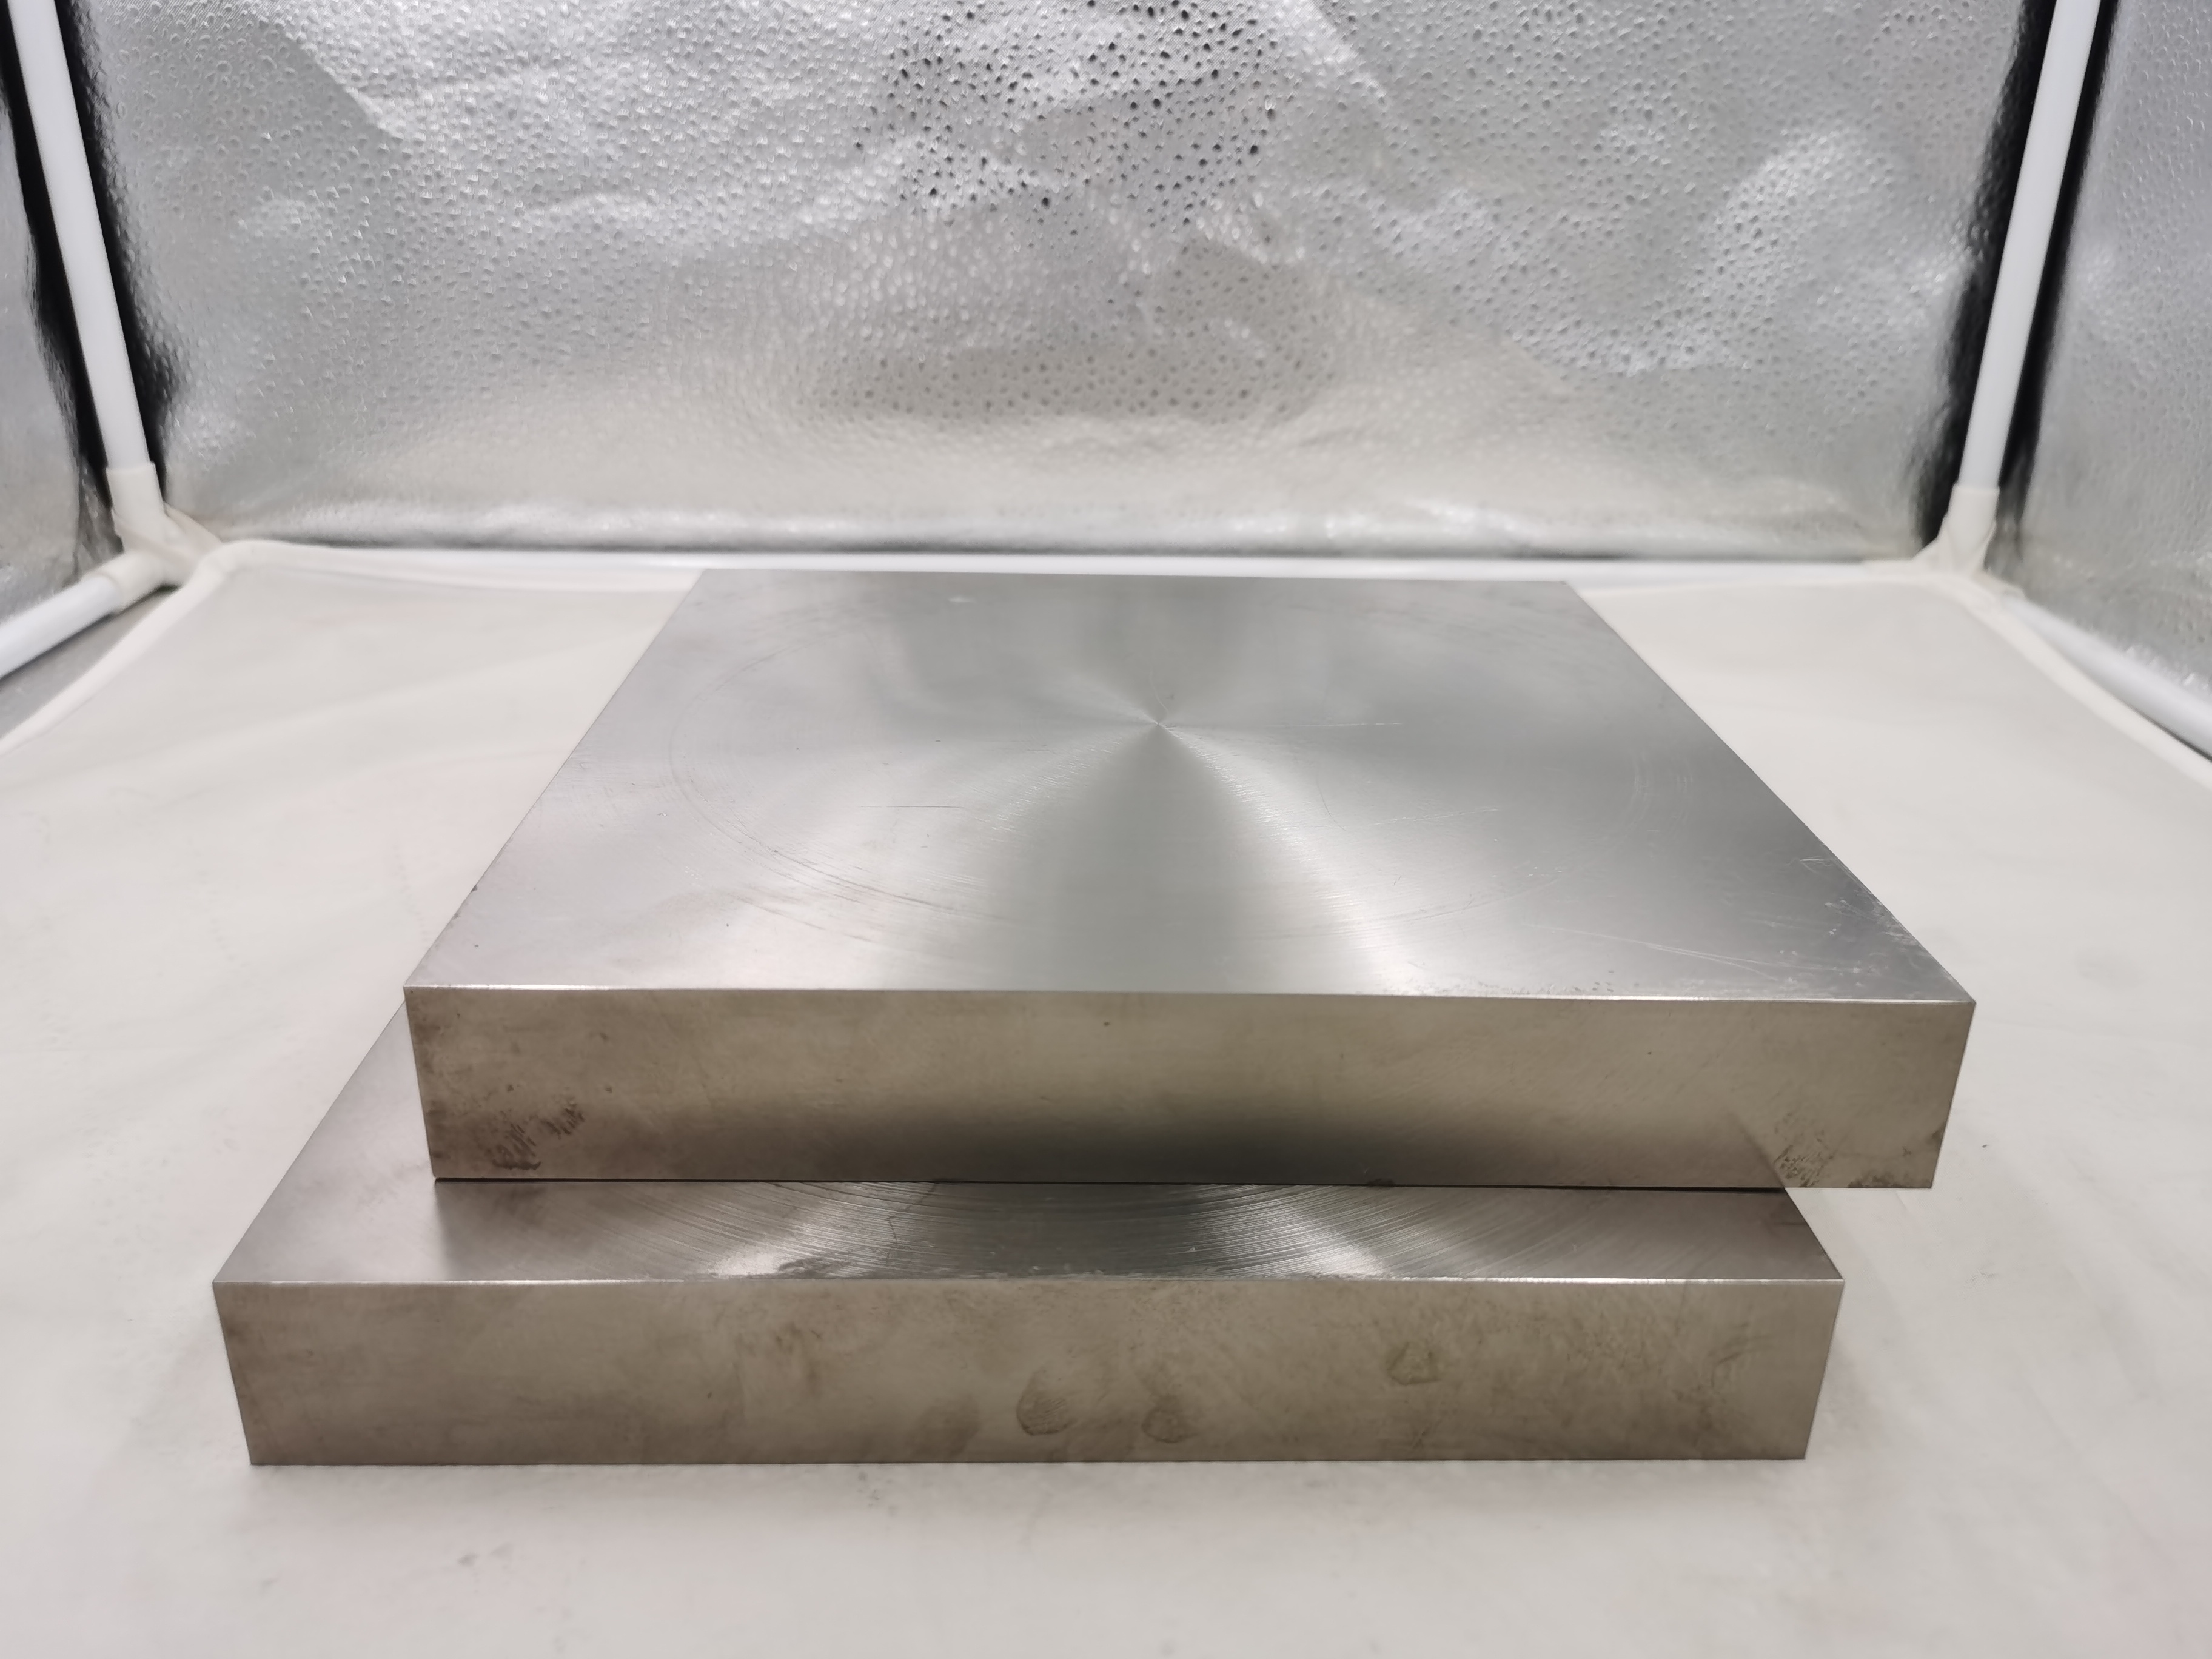 4pcs Gr5 Titanium Alloy Plate Ti Sheet 2*100*100mm 6al-4v For DIY OEM Metalworking Supplies